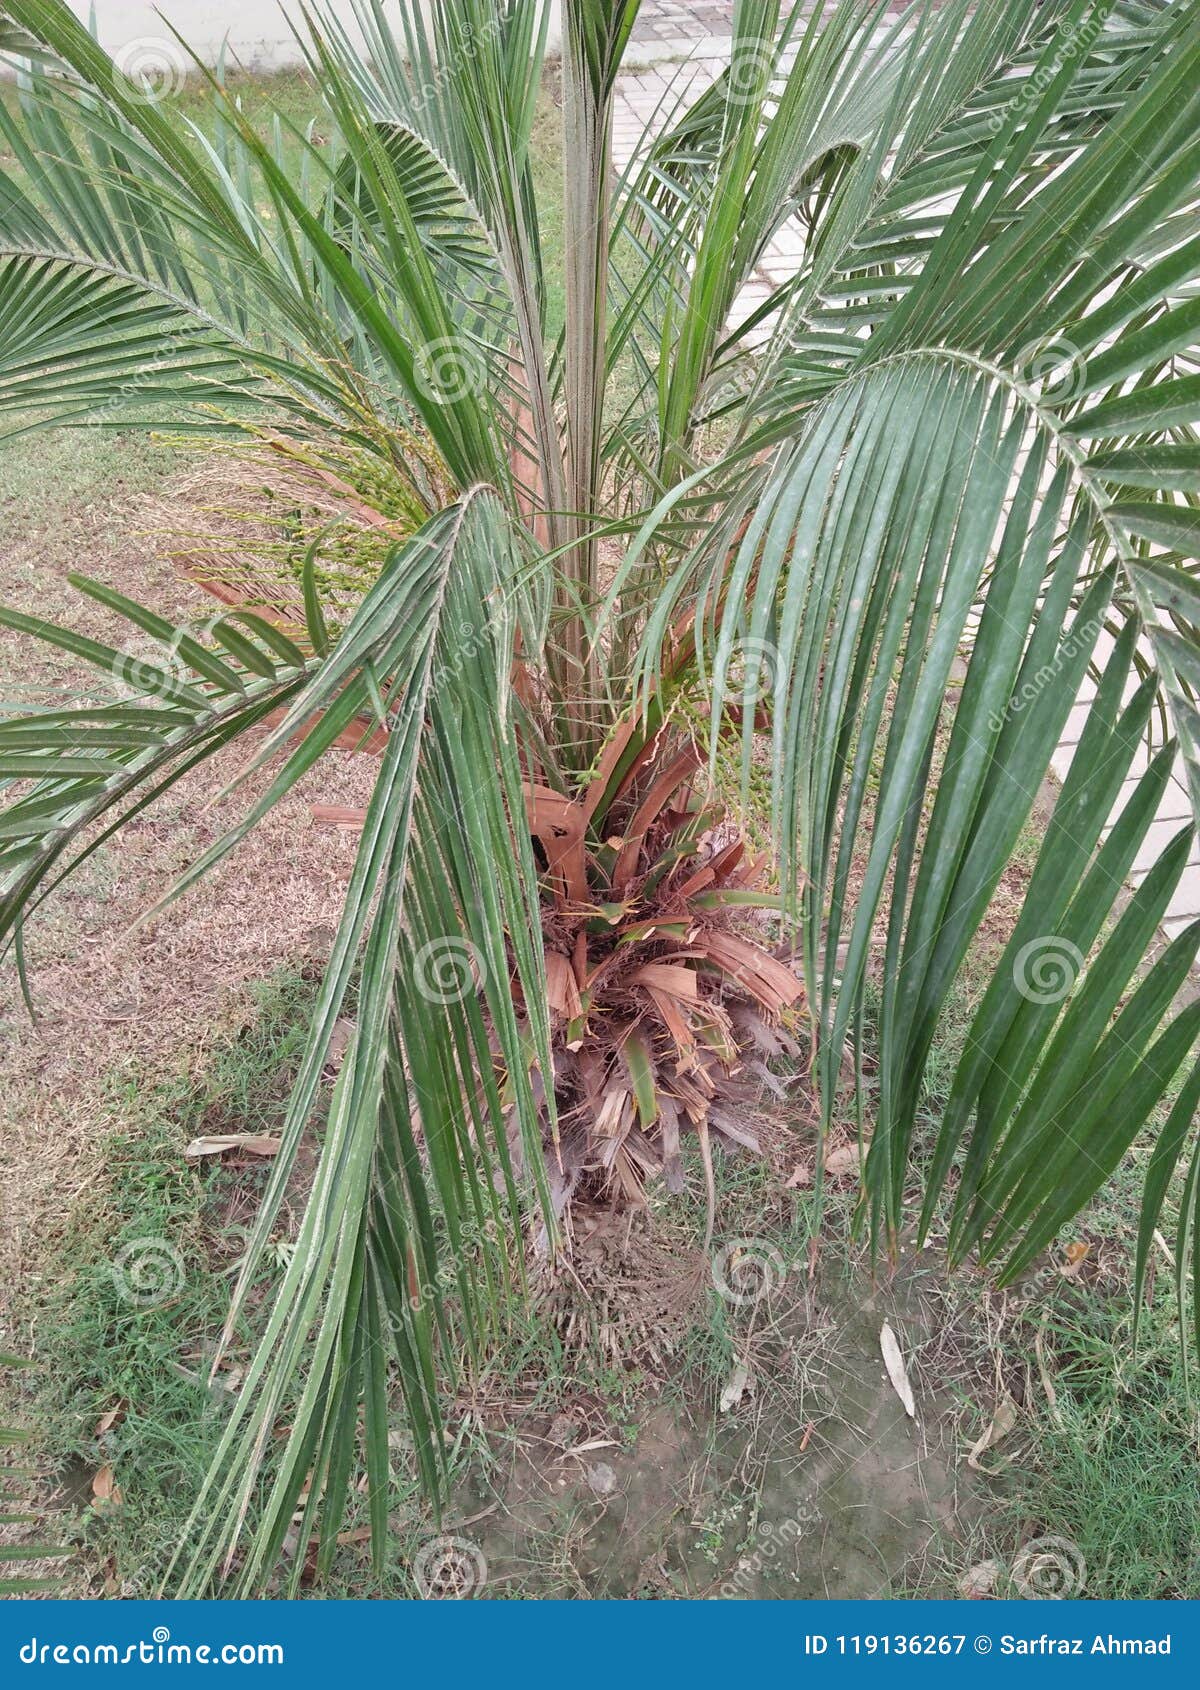 golden cane palm care instructions